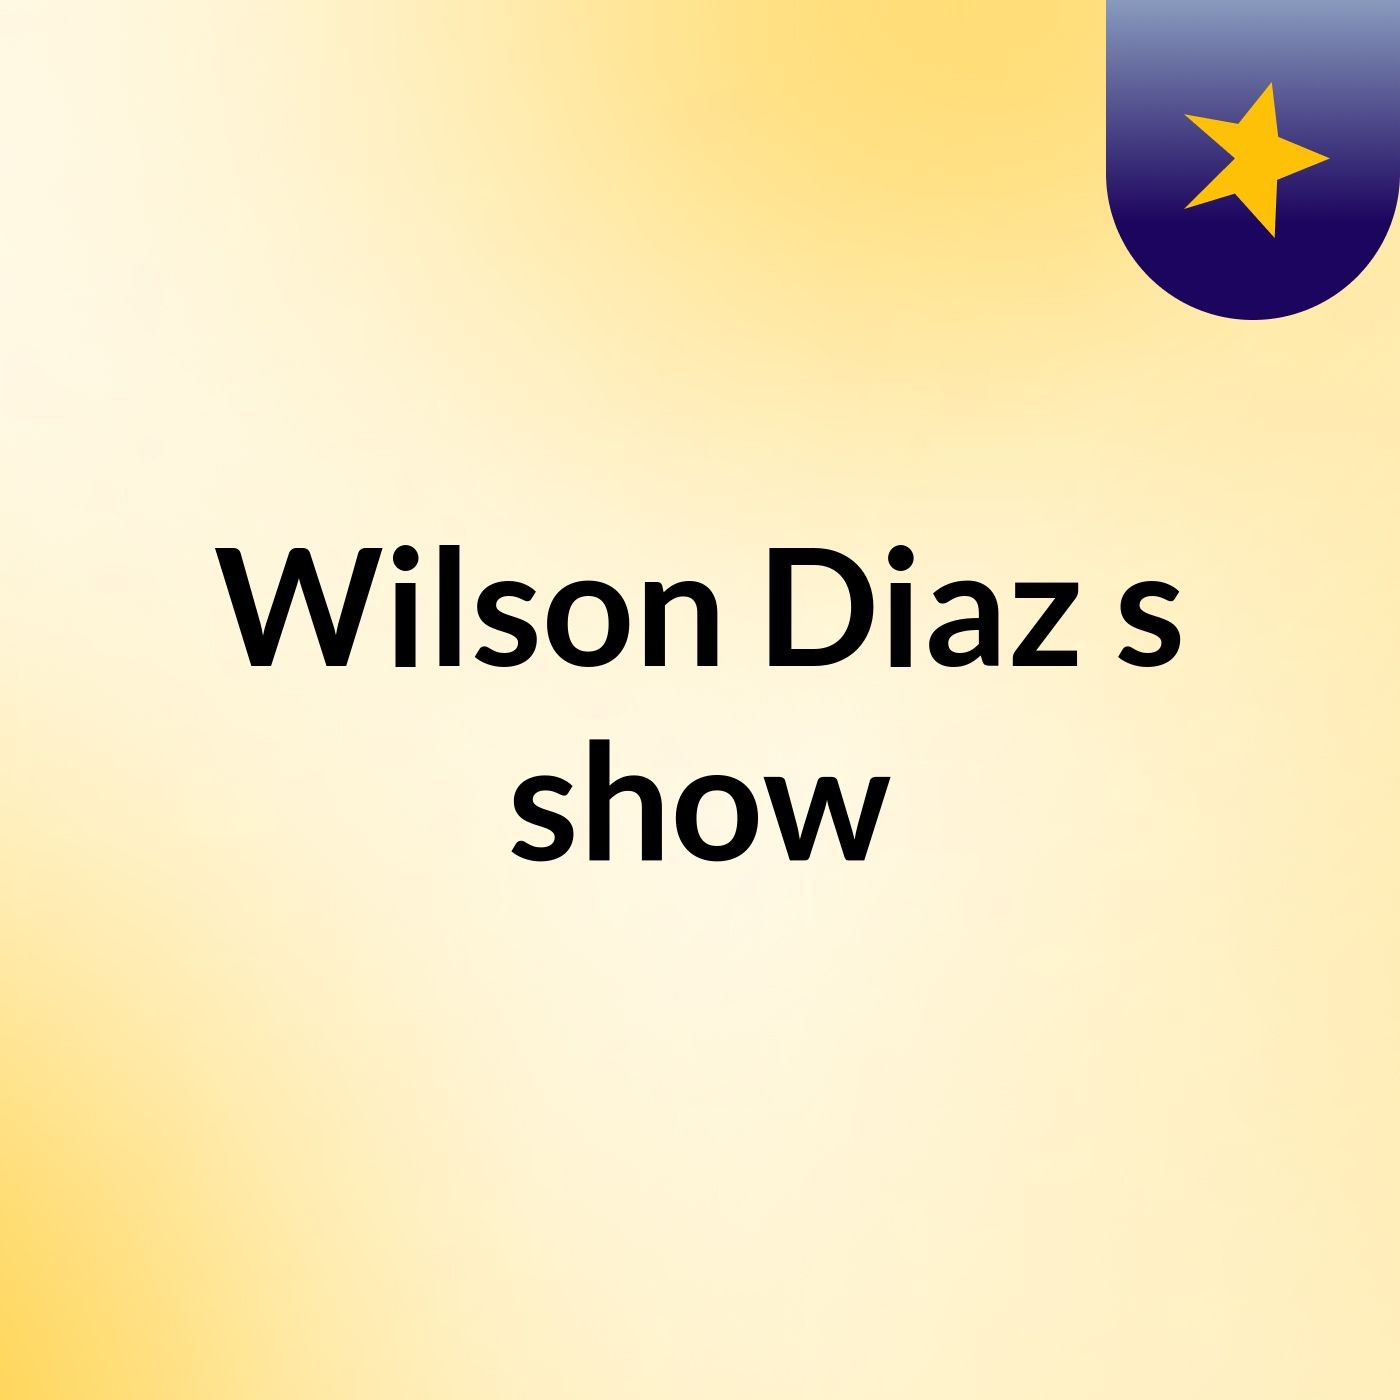 Wilson Diaz's show